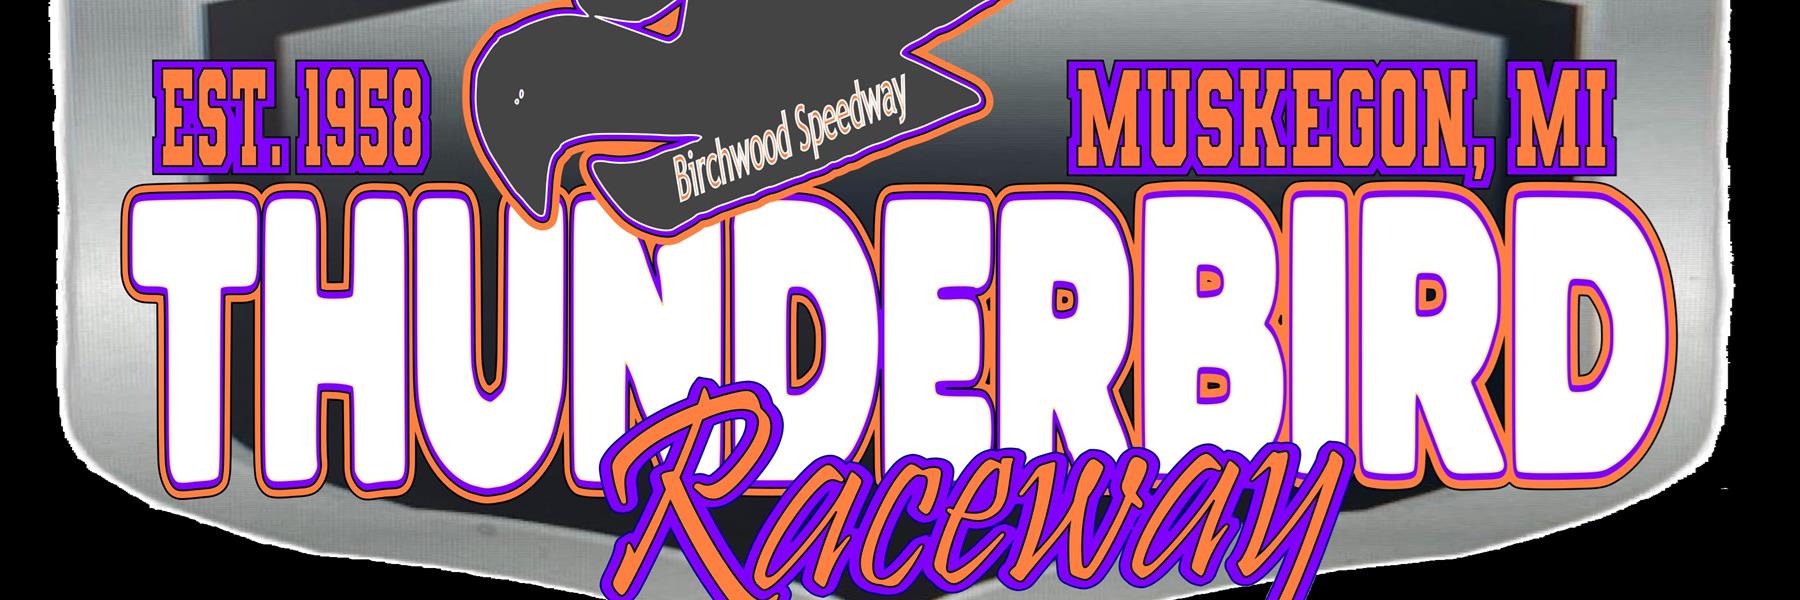 8/18/2018 - Thunderbird Raceway